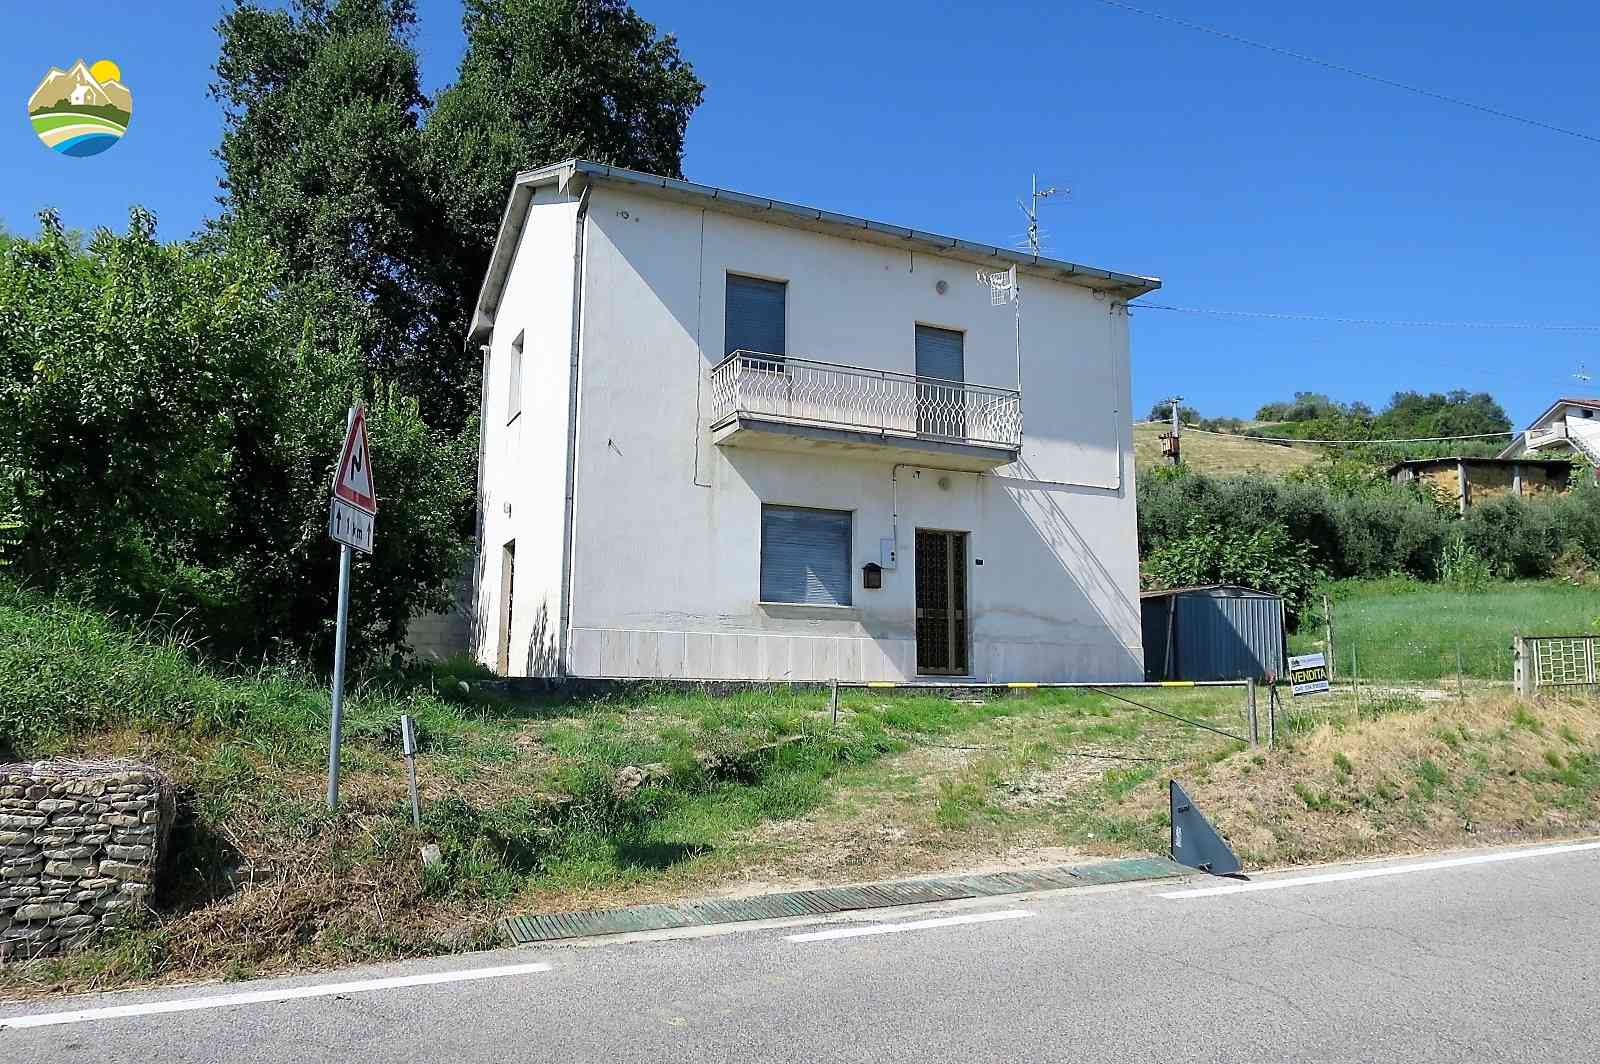 Country Houses Country Houses for sale Cellino Attanasio (TE), Casa 81 - Cellino Attanasio - EUR 81.380 10 small